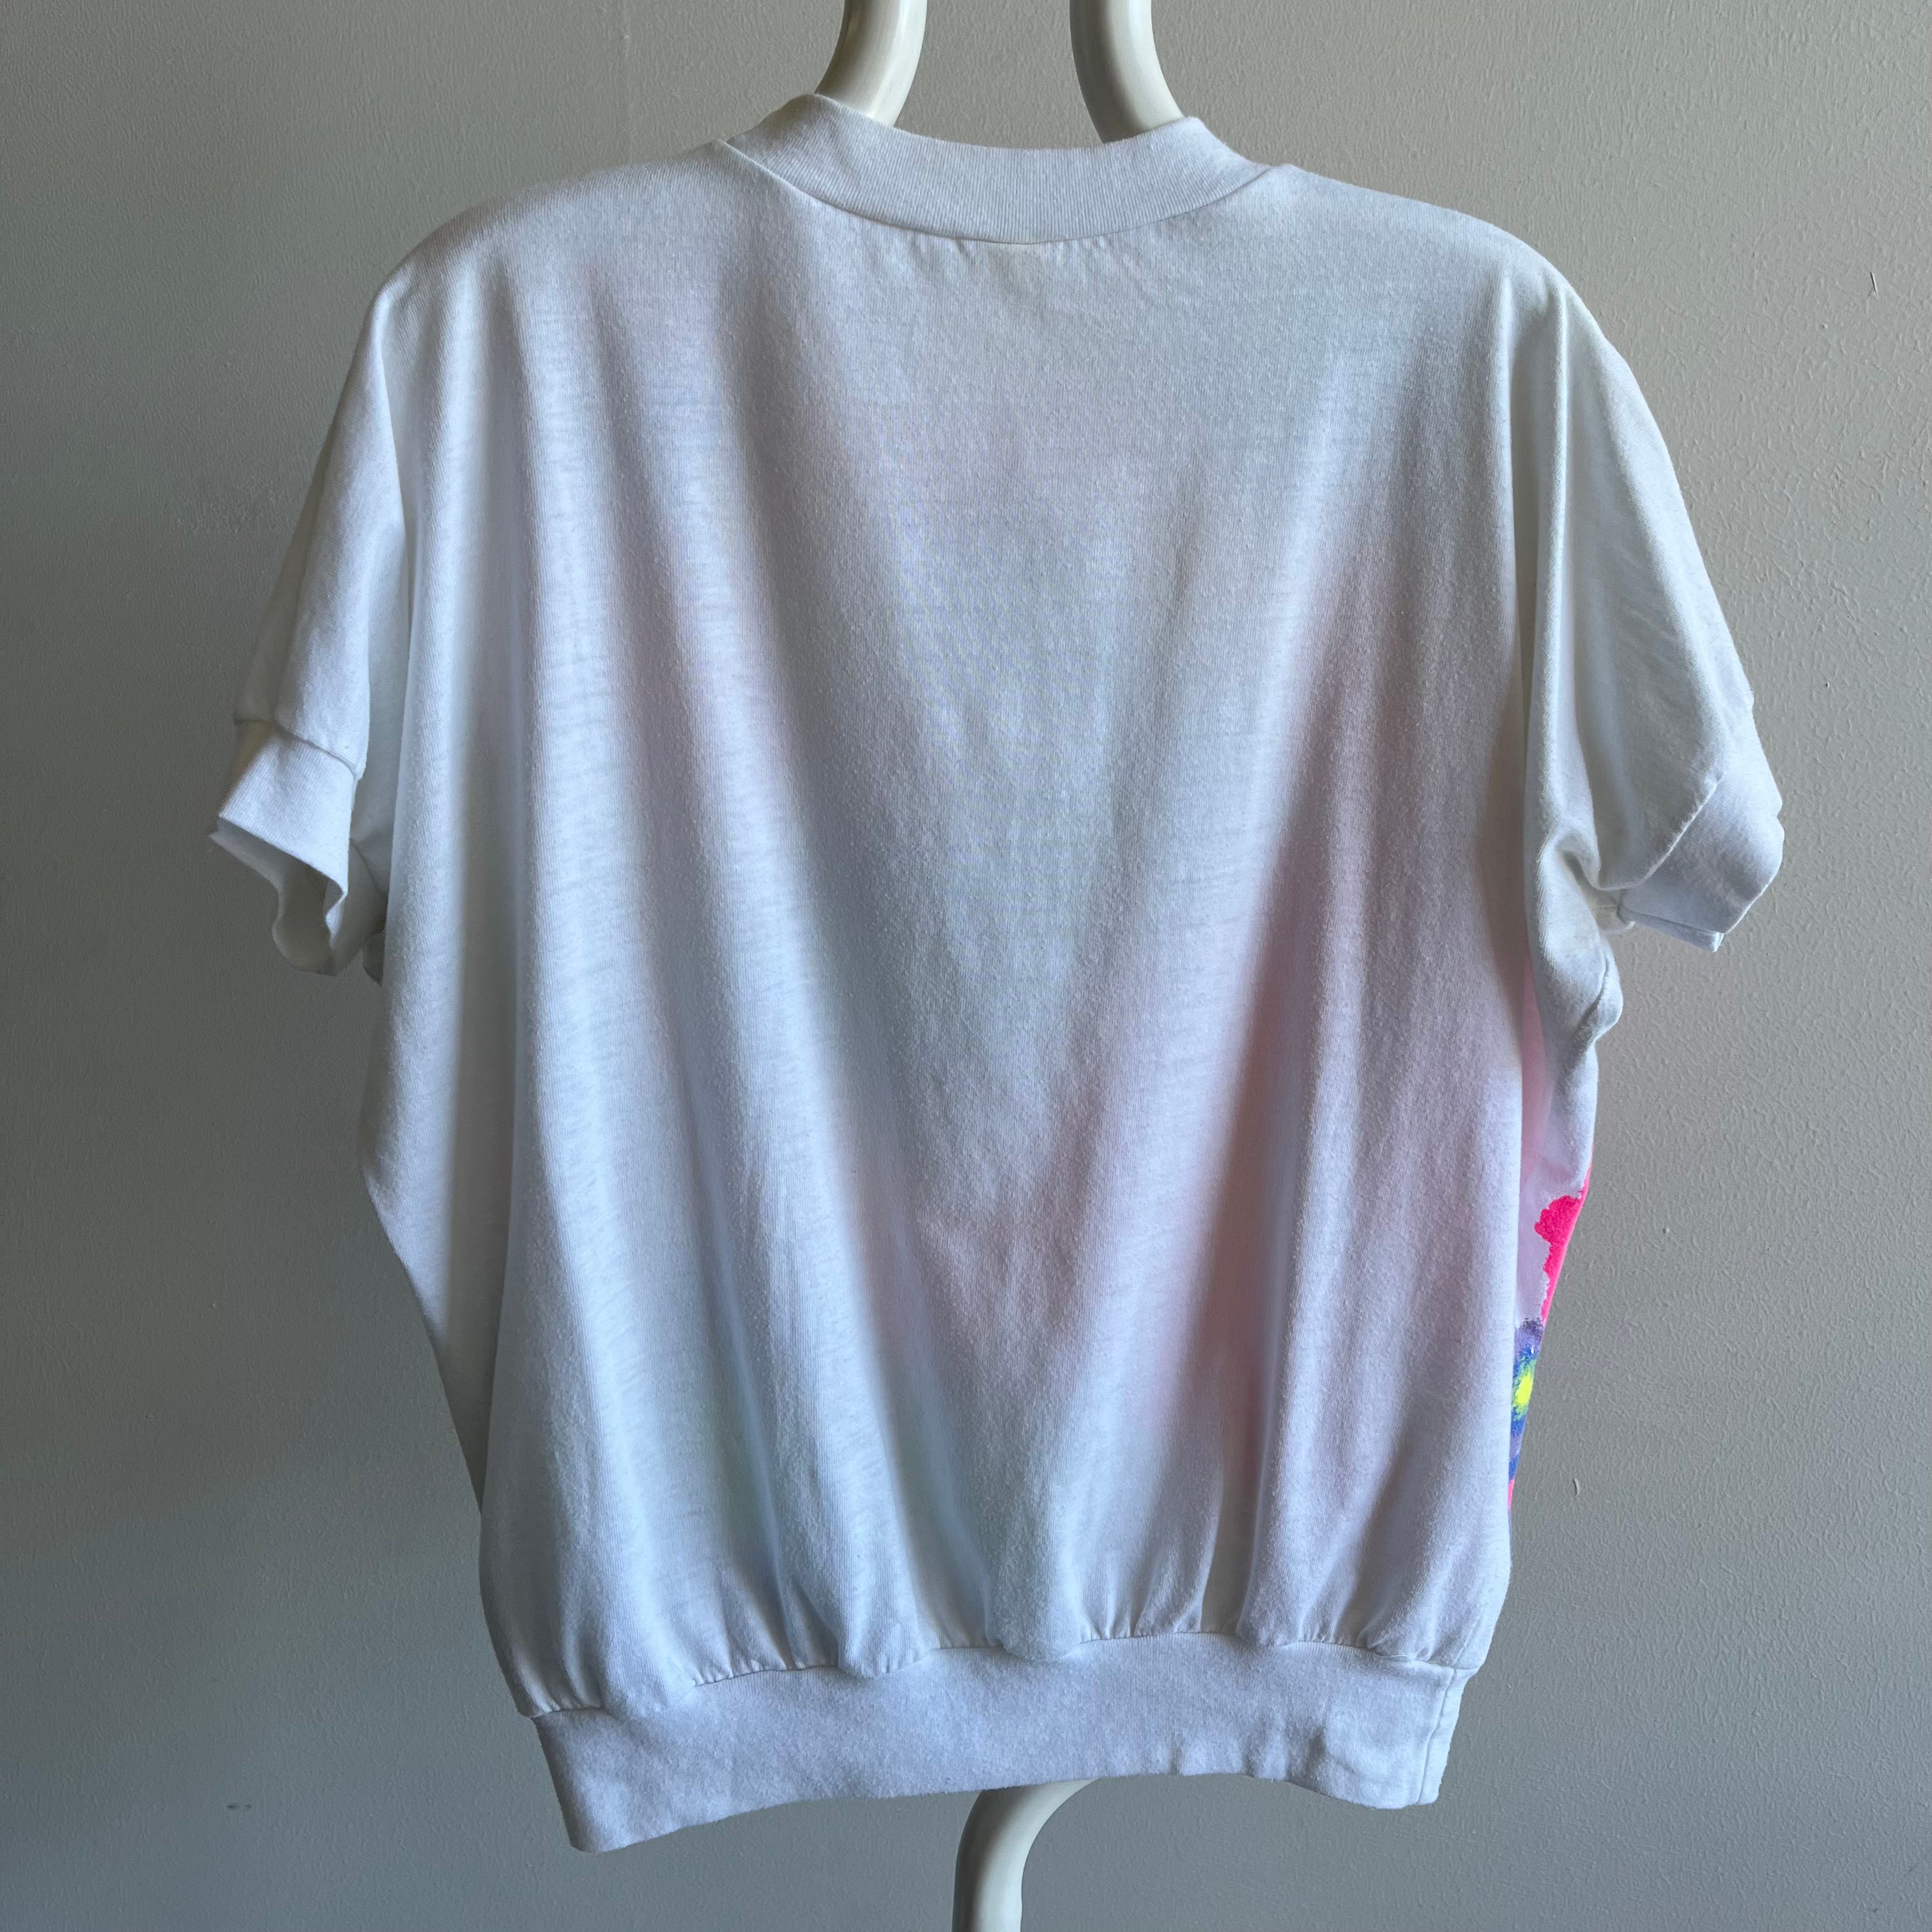 1980s Floral Top/T-Shirt